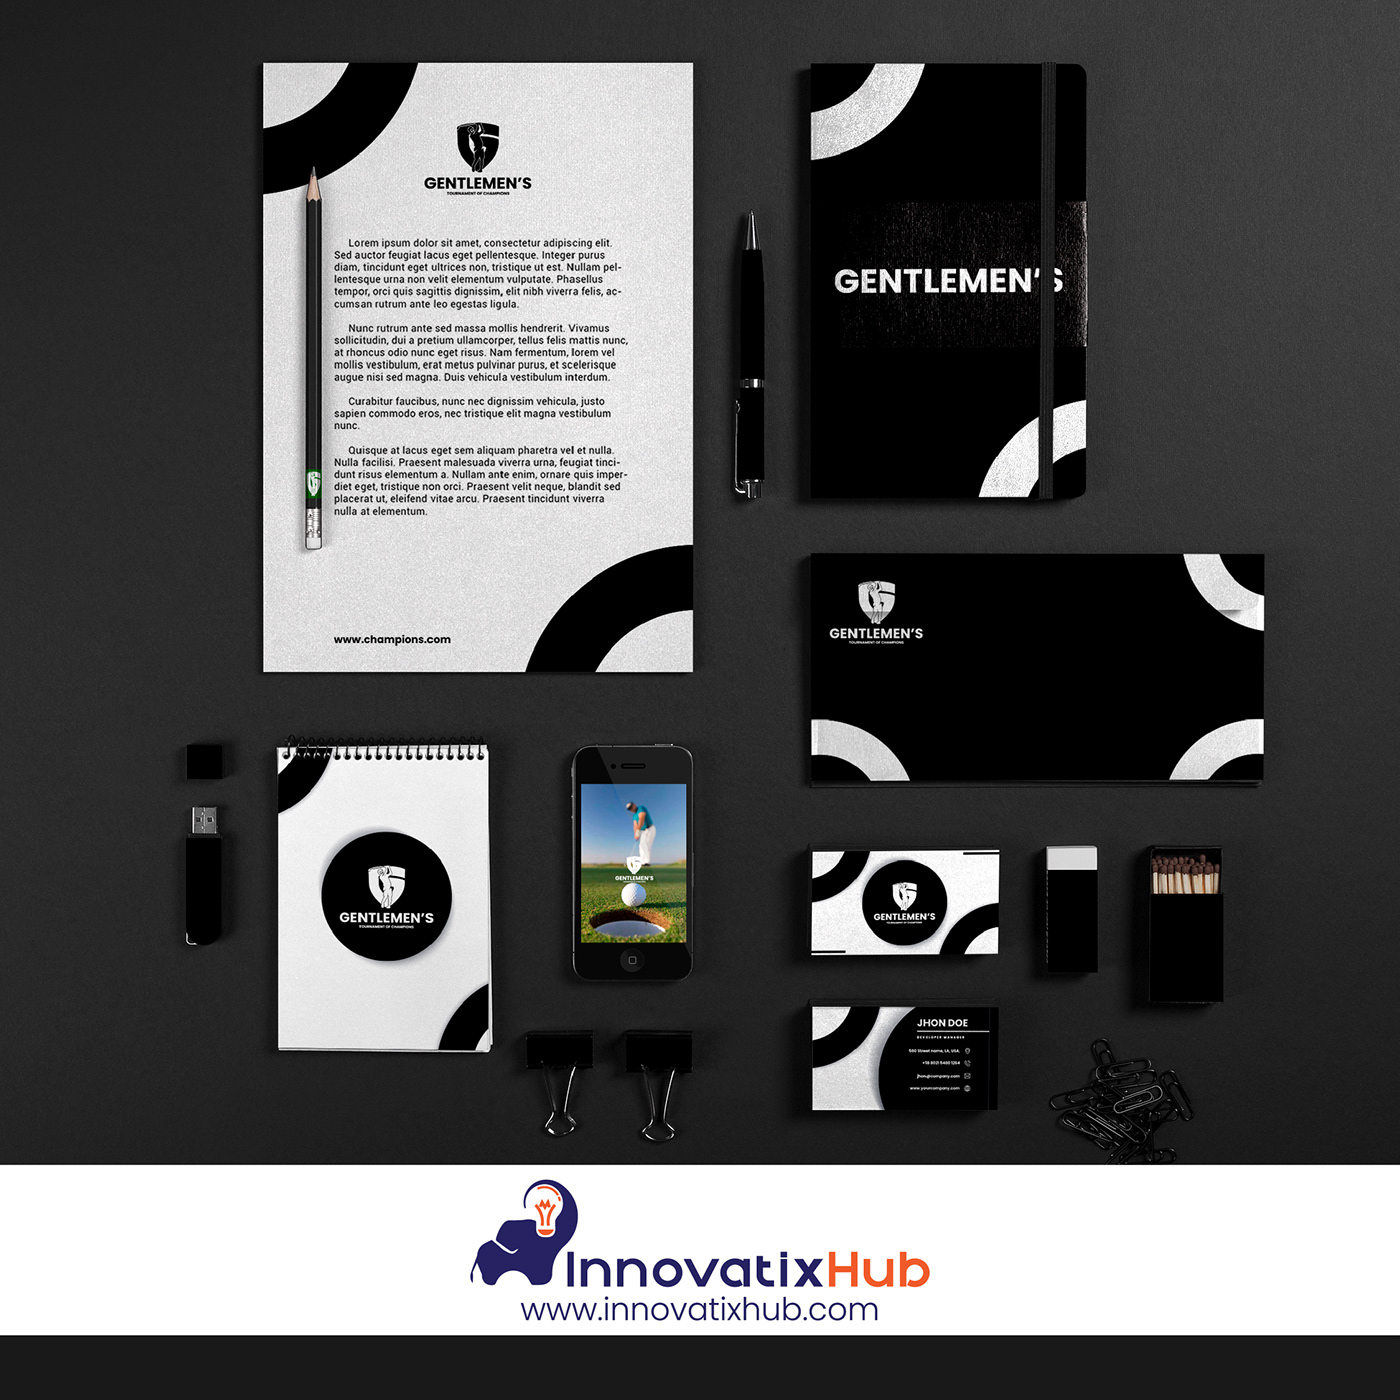 Elevate your brand status with InnovatixHub's exclusive "Gentlemen's Tournament of Championship!